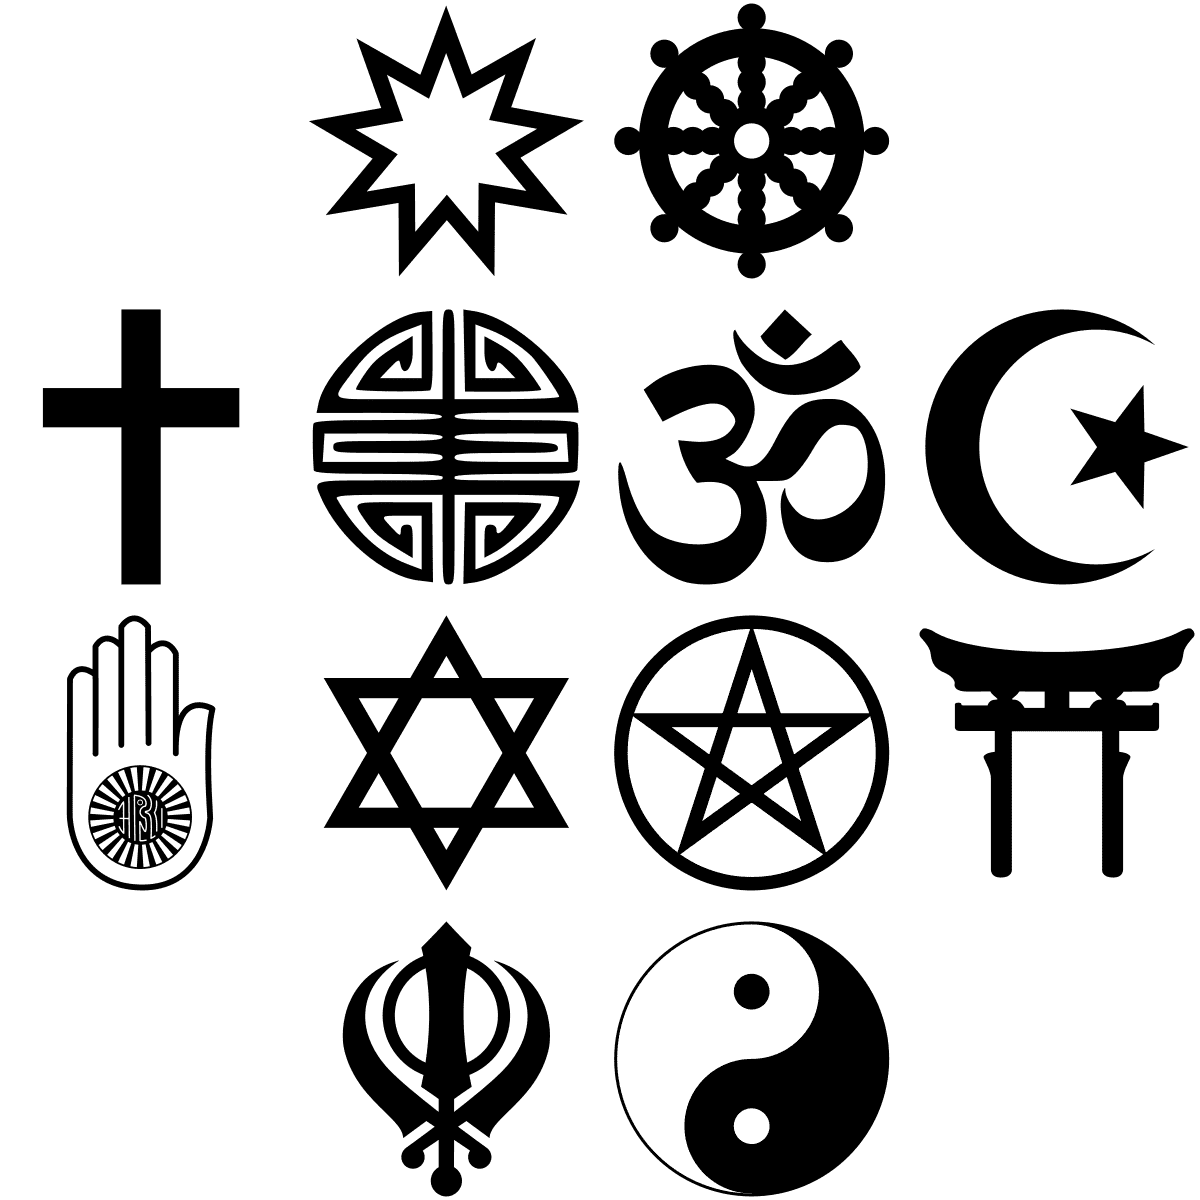 meaning of interfaith symbols